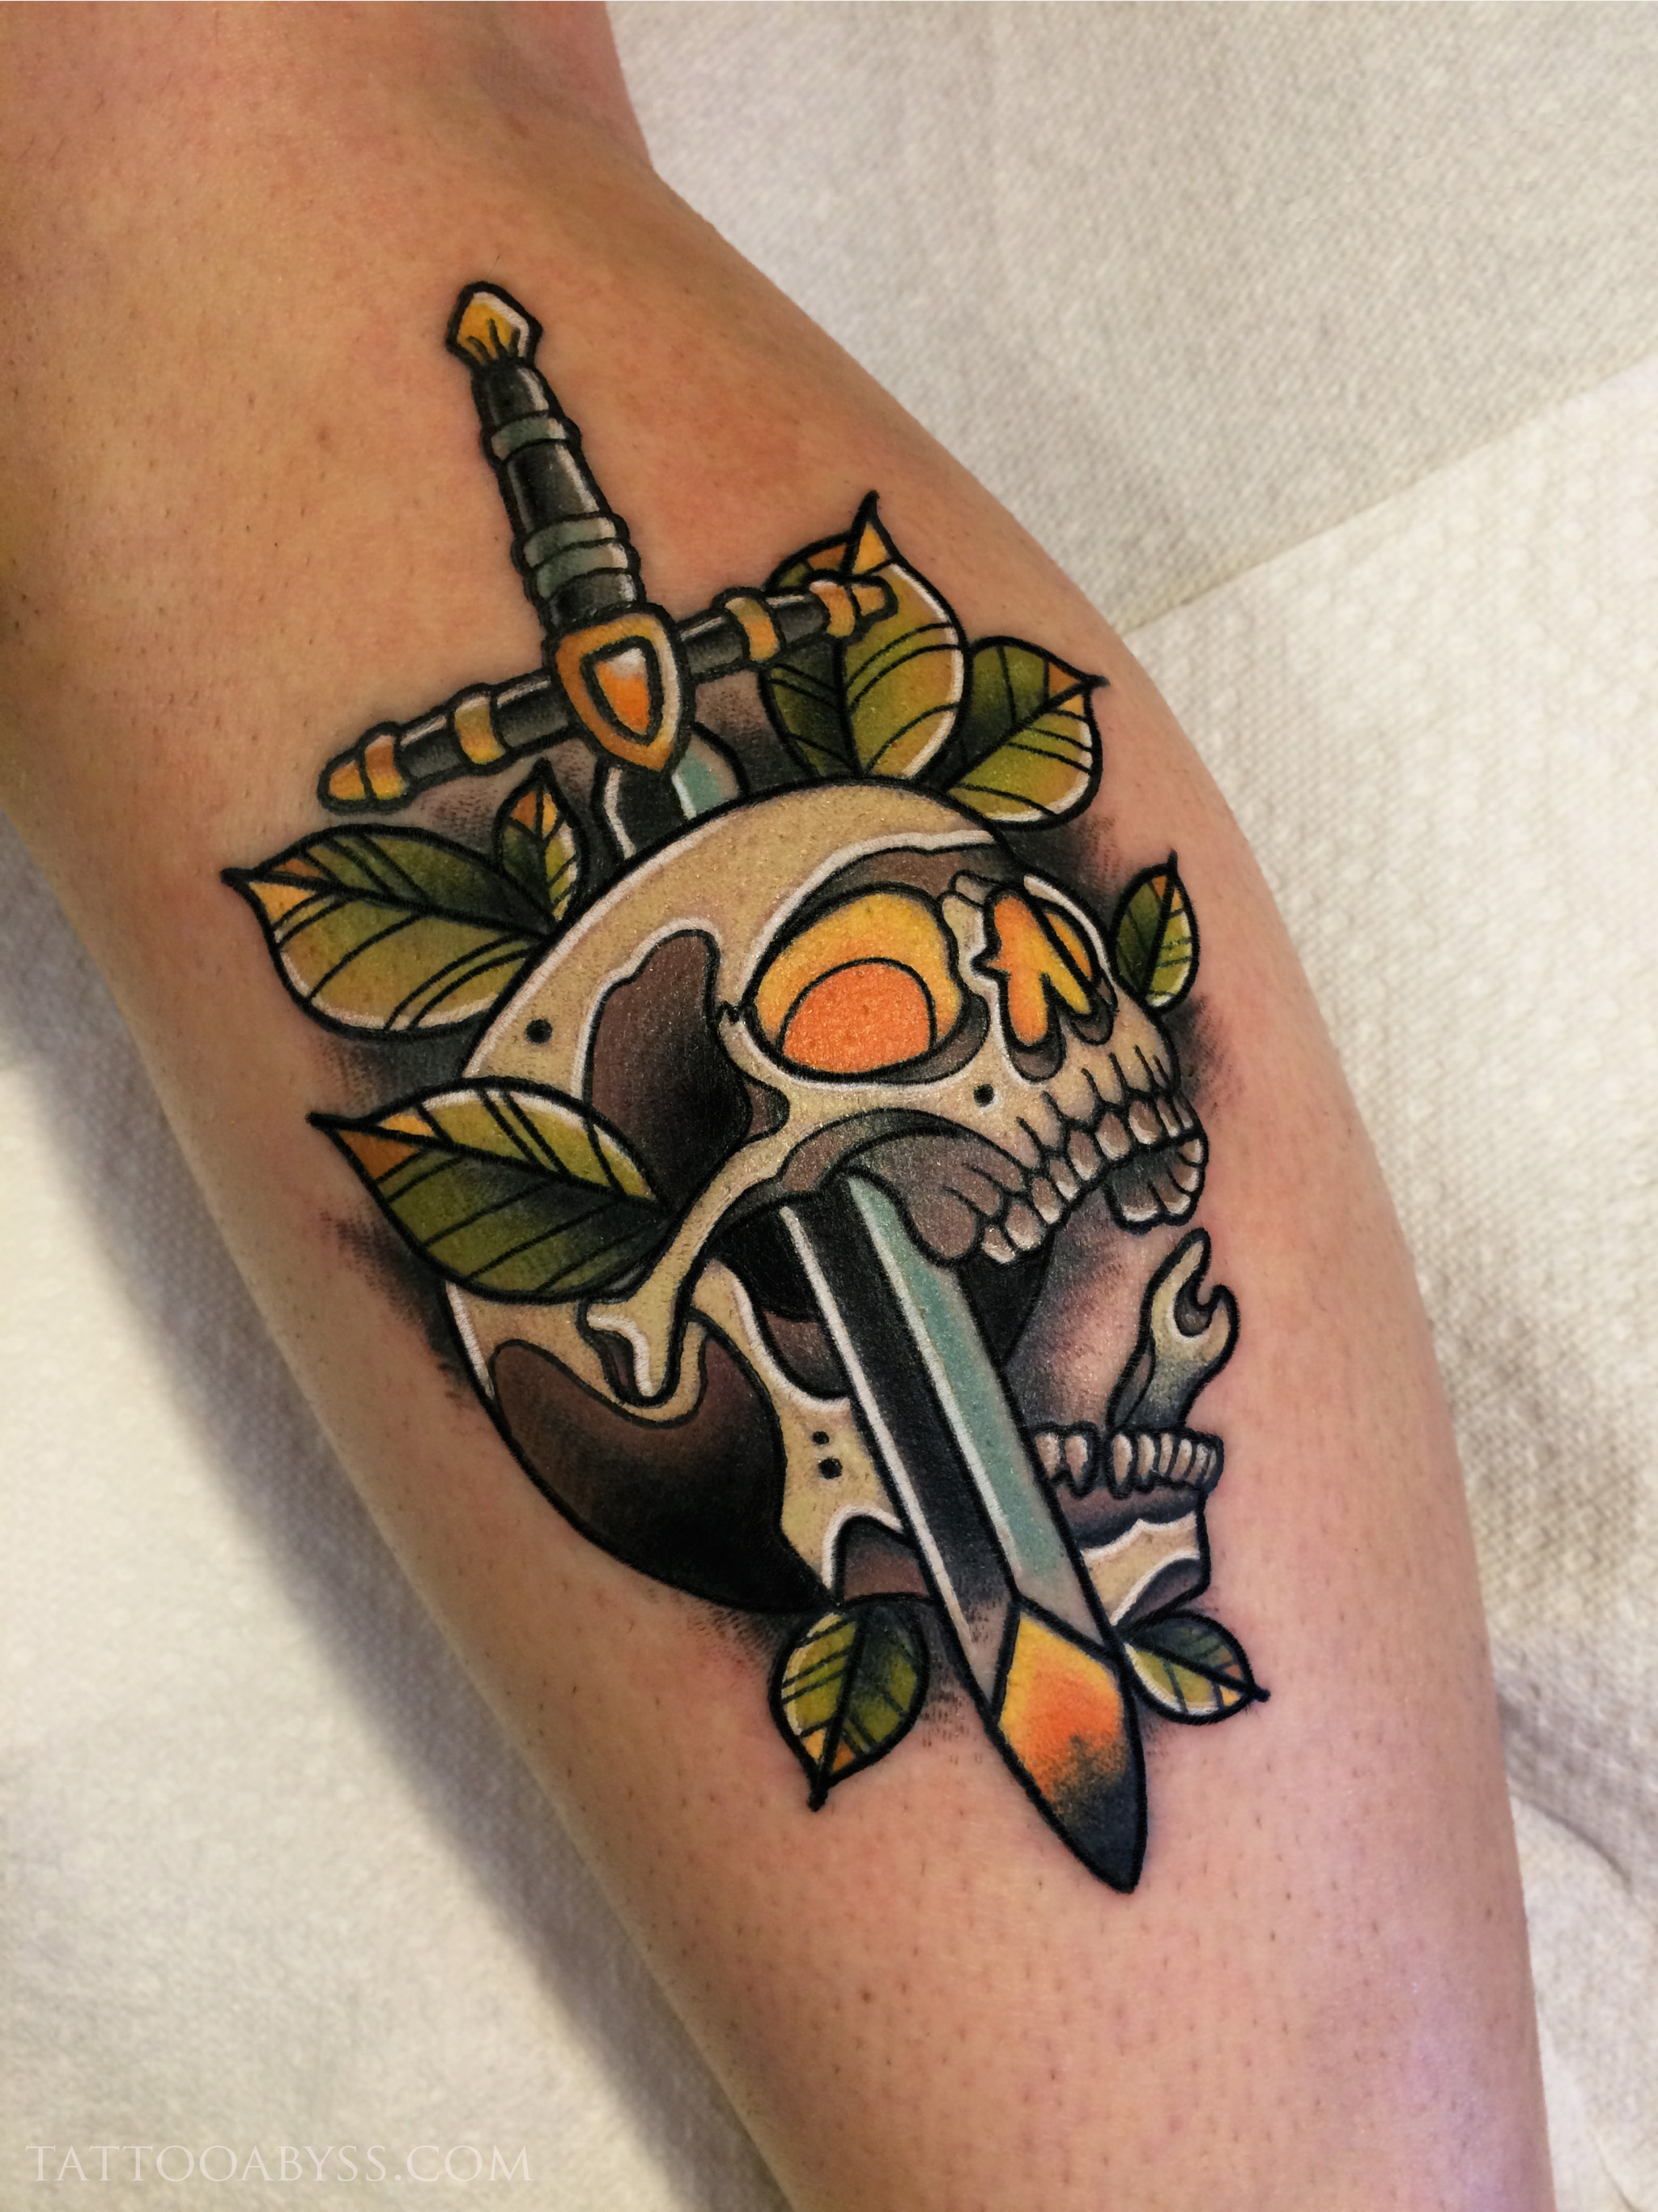 Skull-Sword-kevin-tattoo-abyss